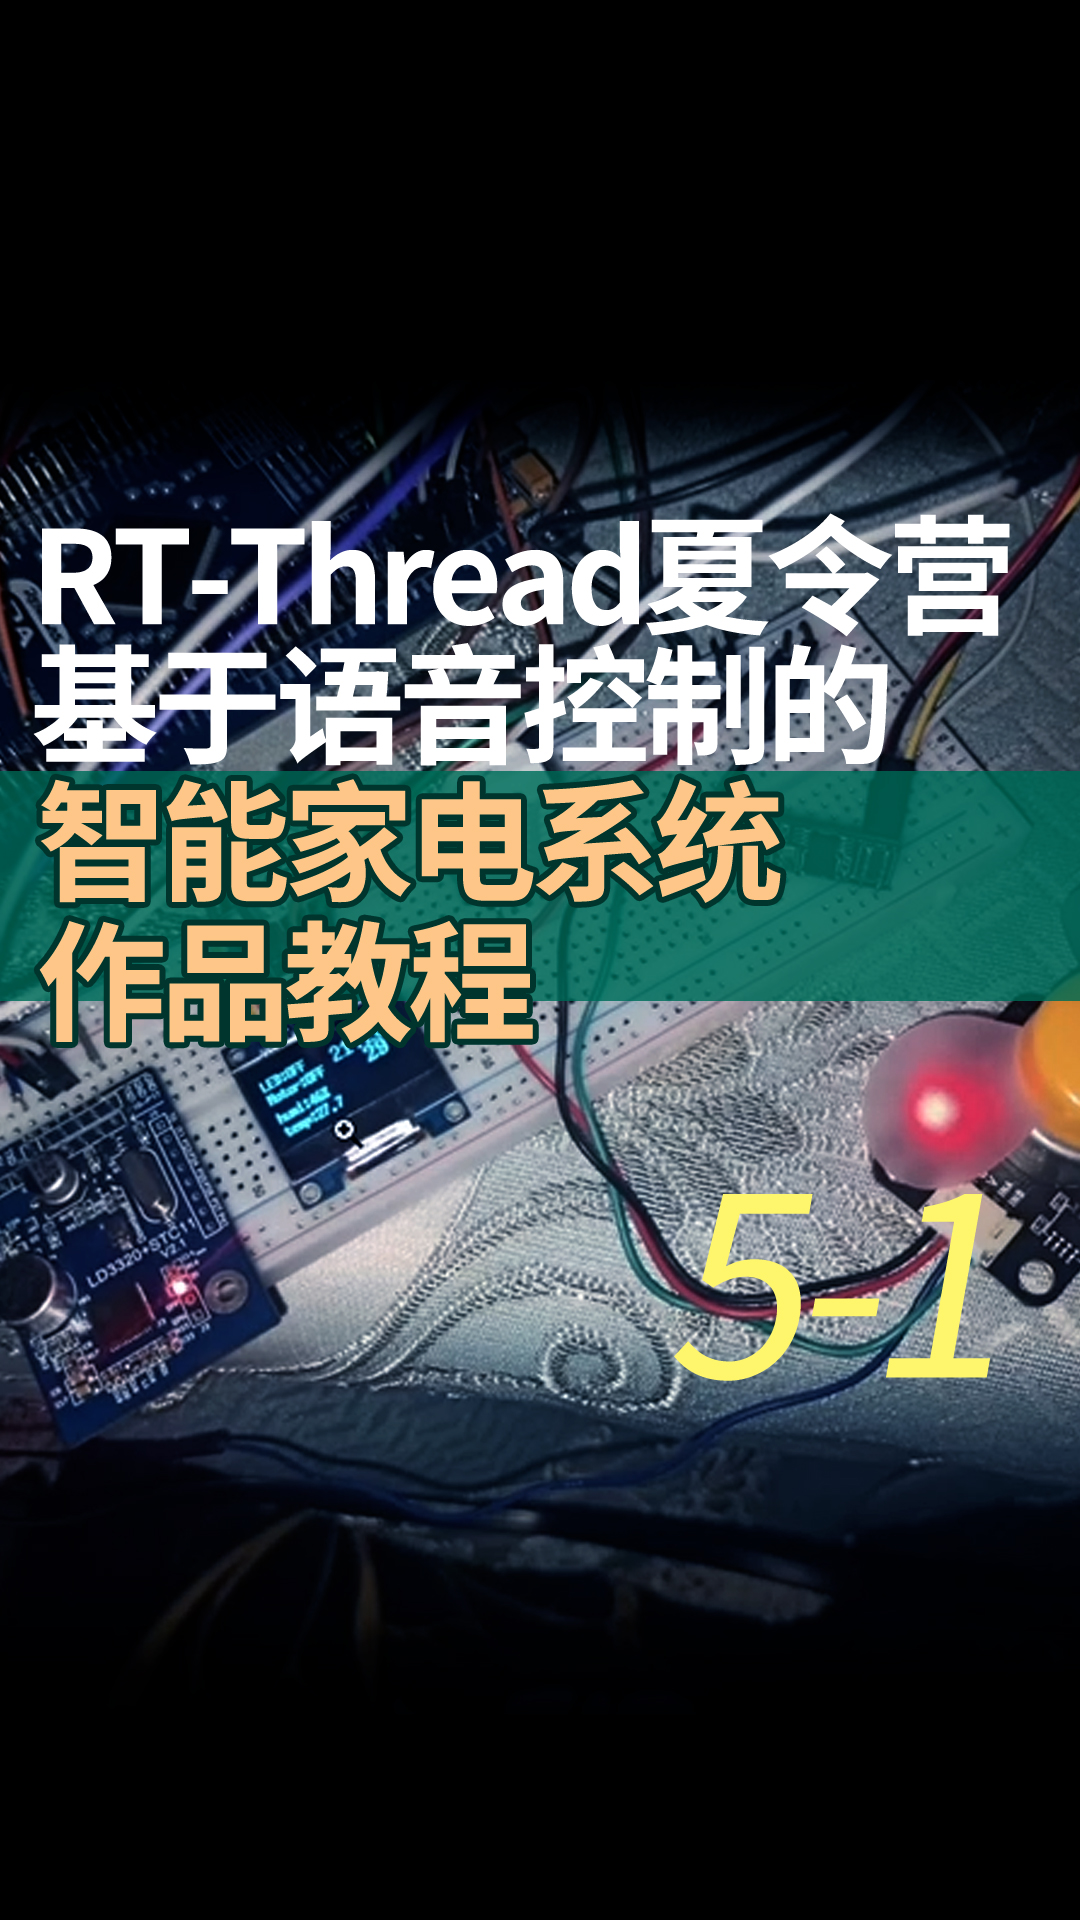 RT-Thread夏令营基于语音控制的智能家电系统作品教程 - 5-1uart实现单片机与单片机通信